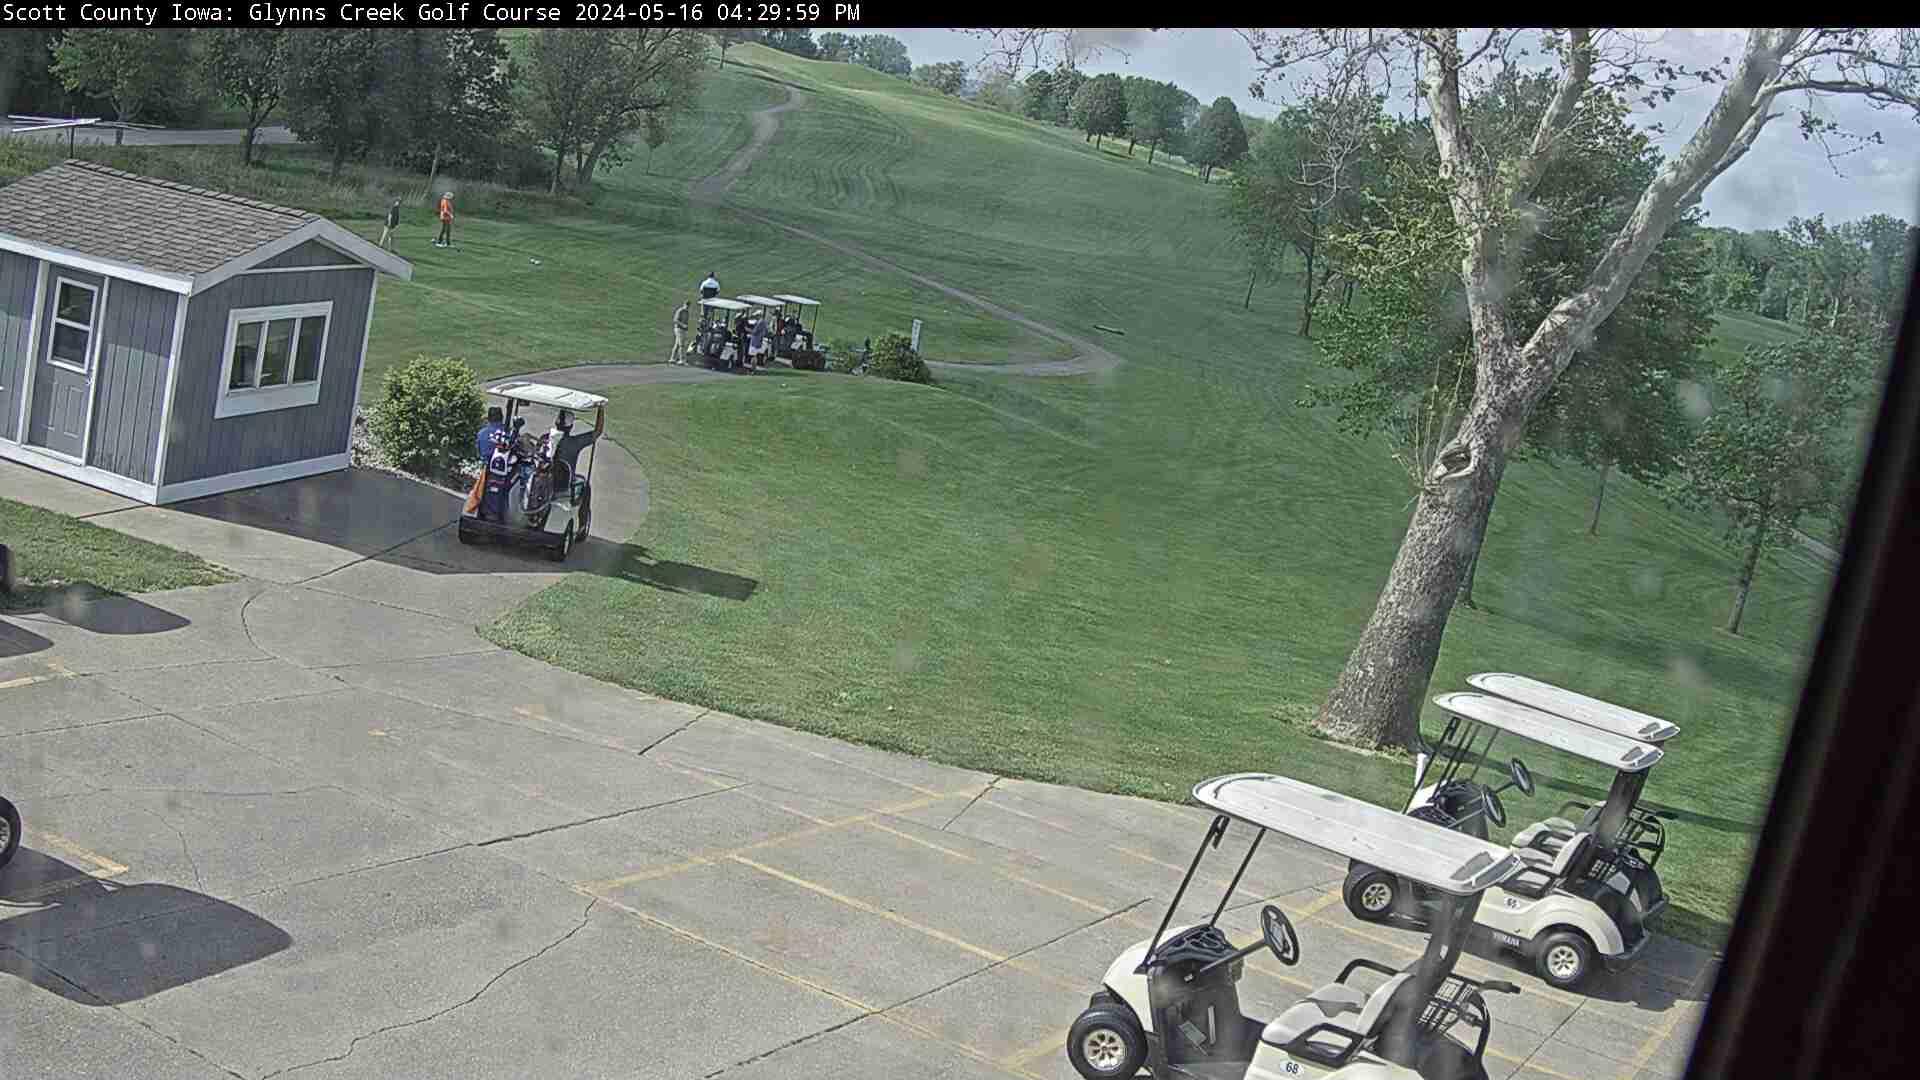 Webcam view of Glynns Creek Golf Course.